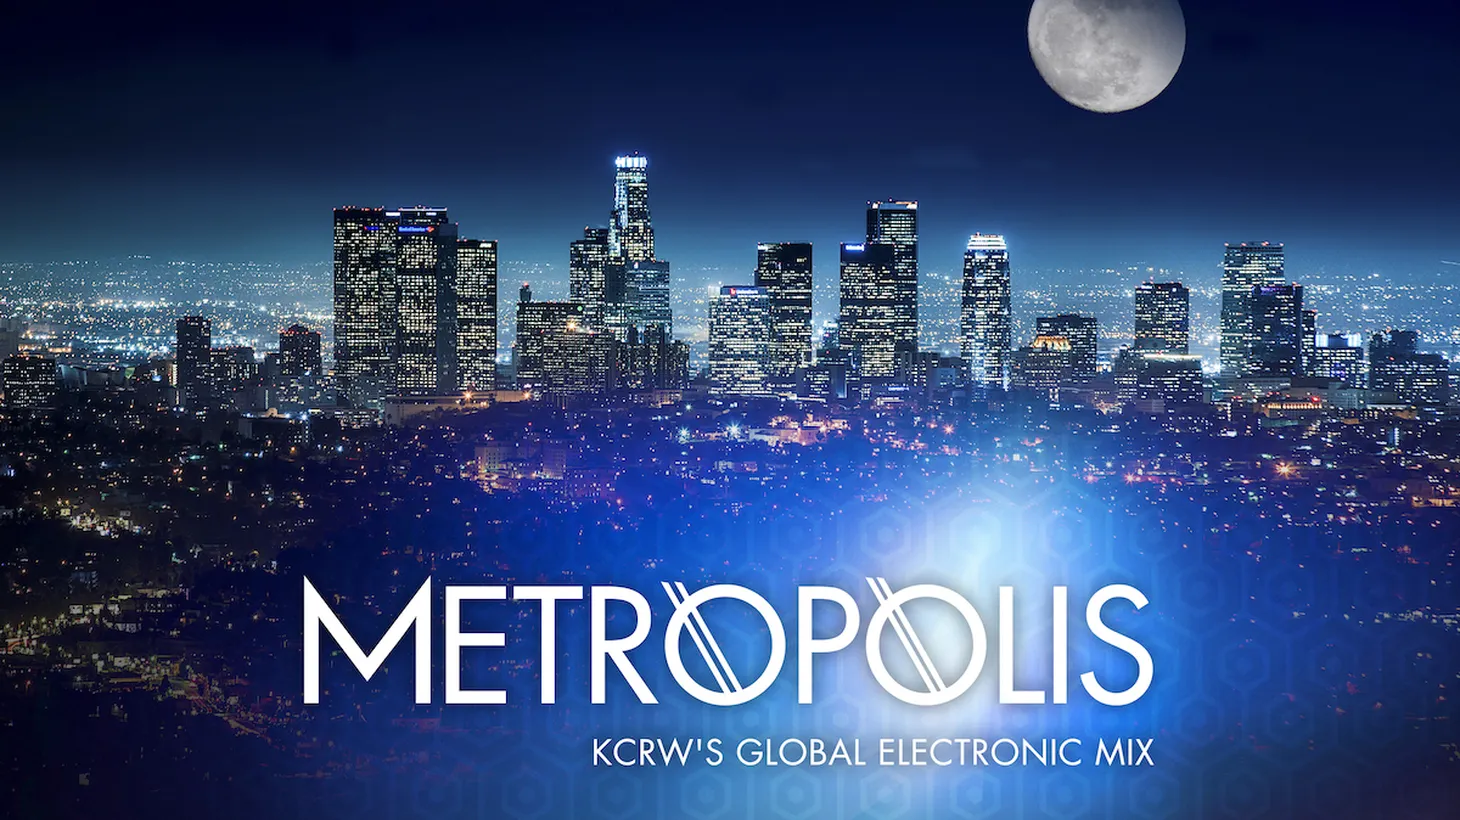 Metropolis playlist January 28, 2023.